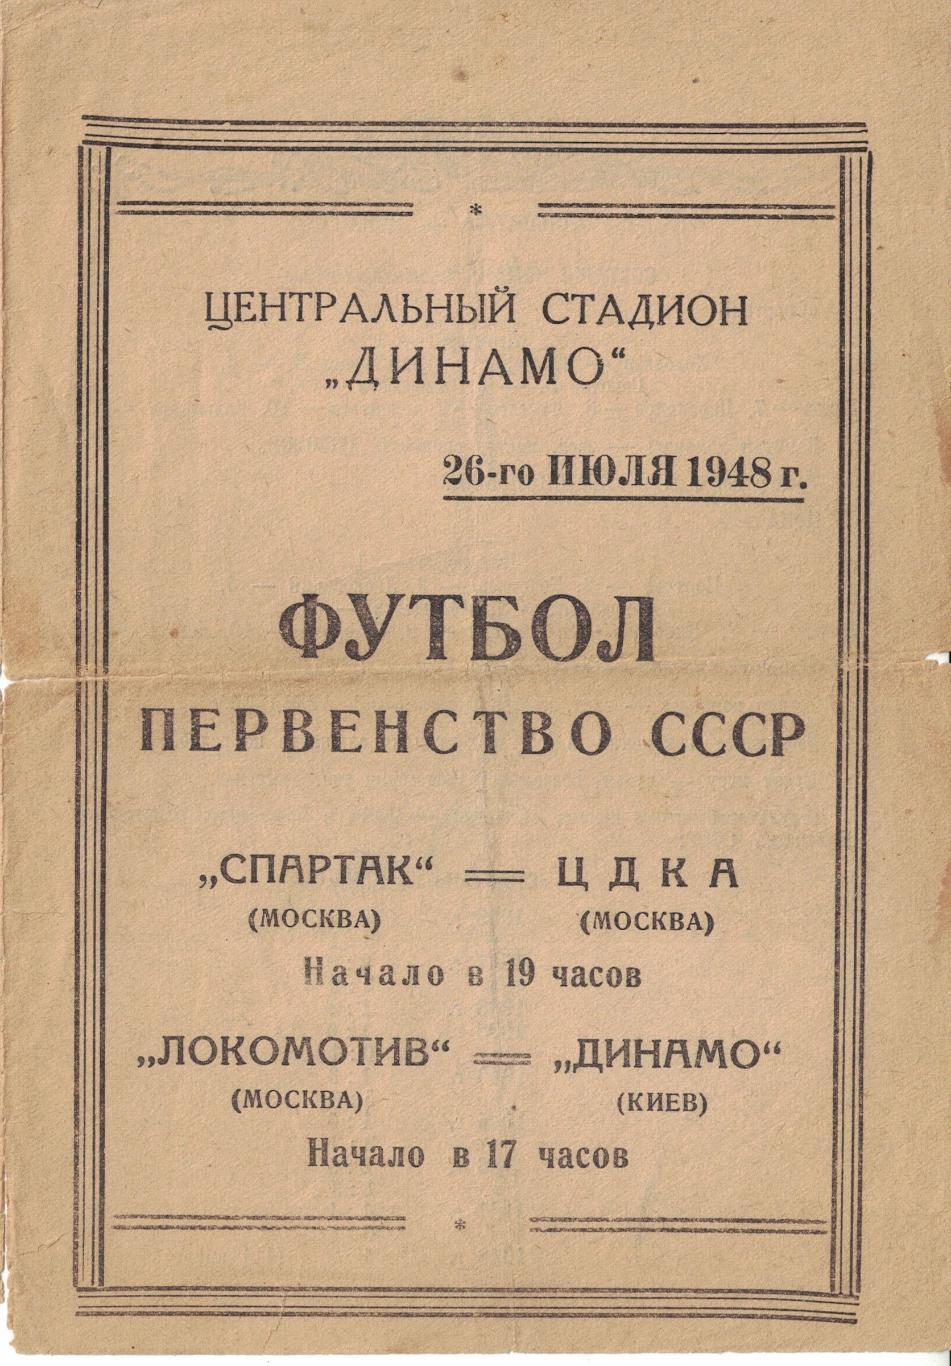 Спартак Москва - ЦДКА, Локомотив Москва - Динамо Киев 26.07.1948 Чемпионат СССР